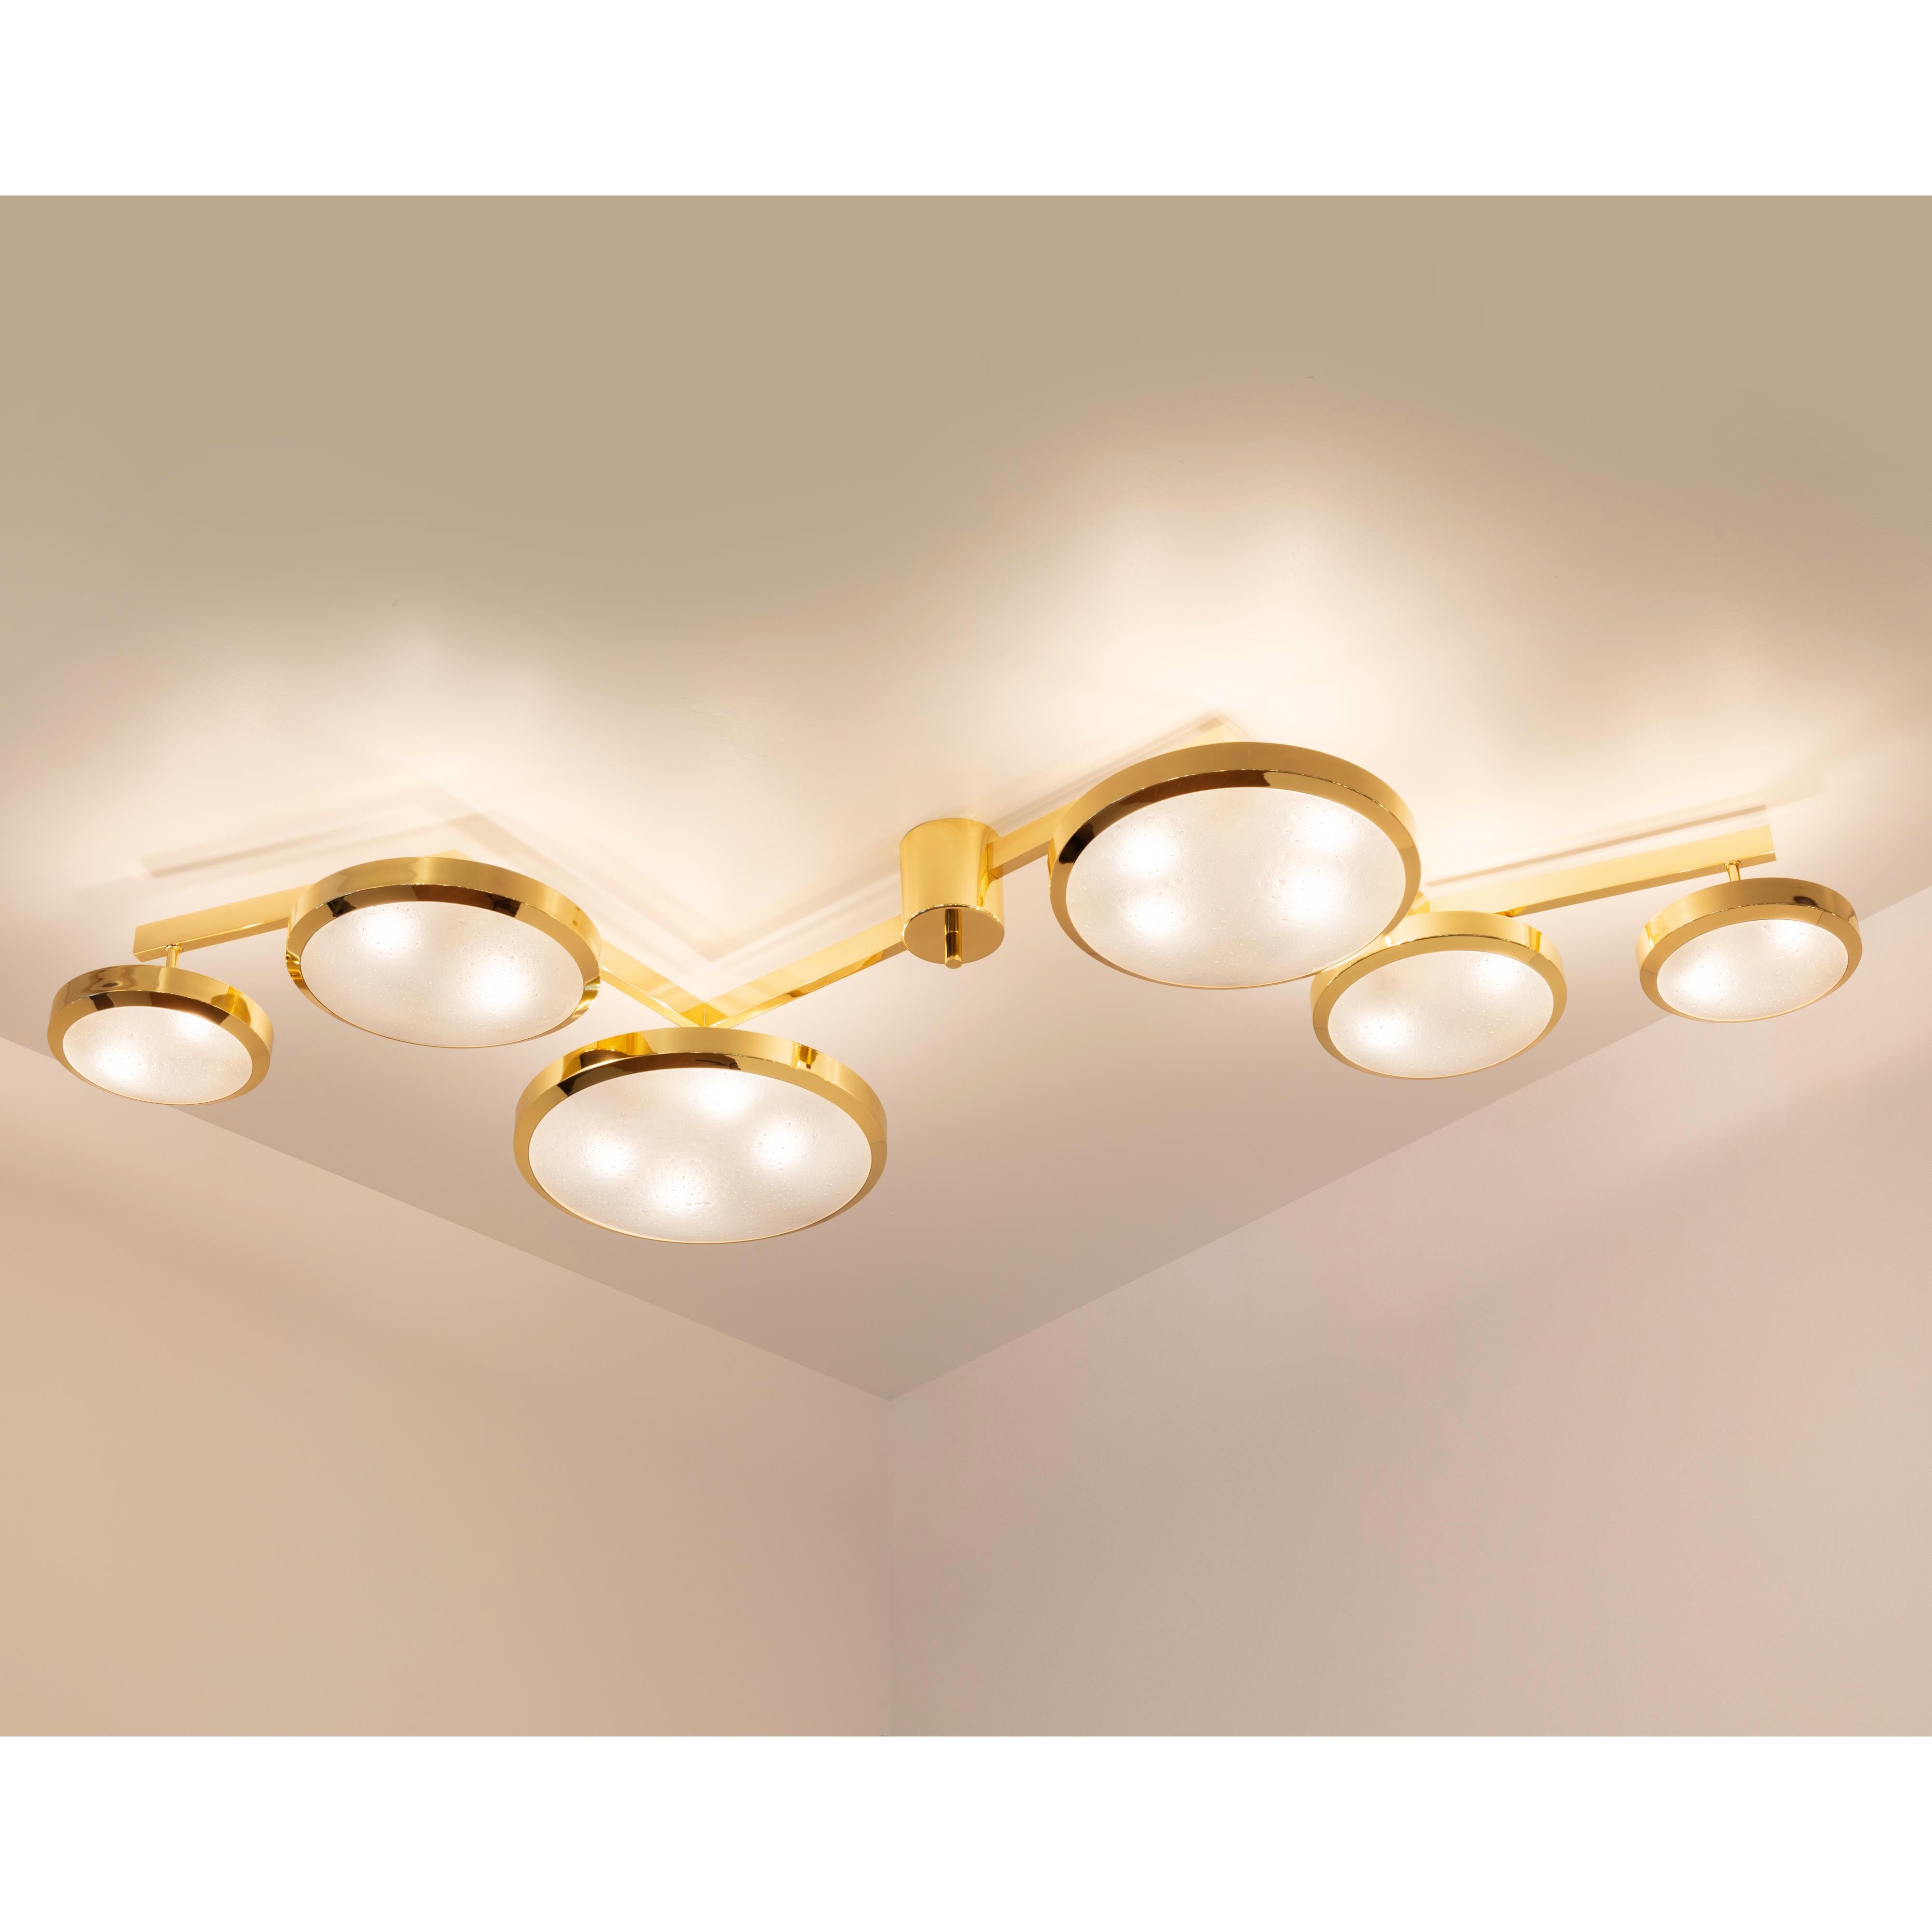 Geometria Sospesa Ceiling Light by Gaspare Asaro-Satin Brass Finish For Sale 1